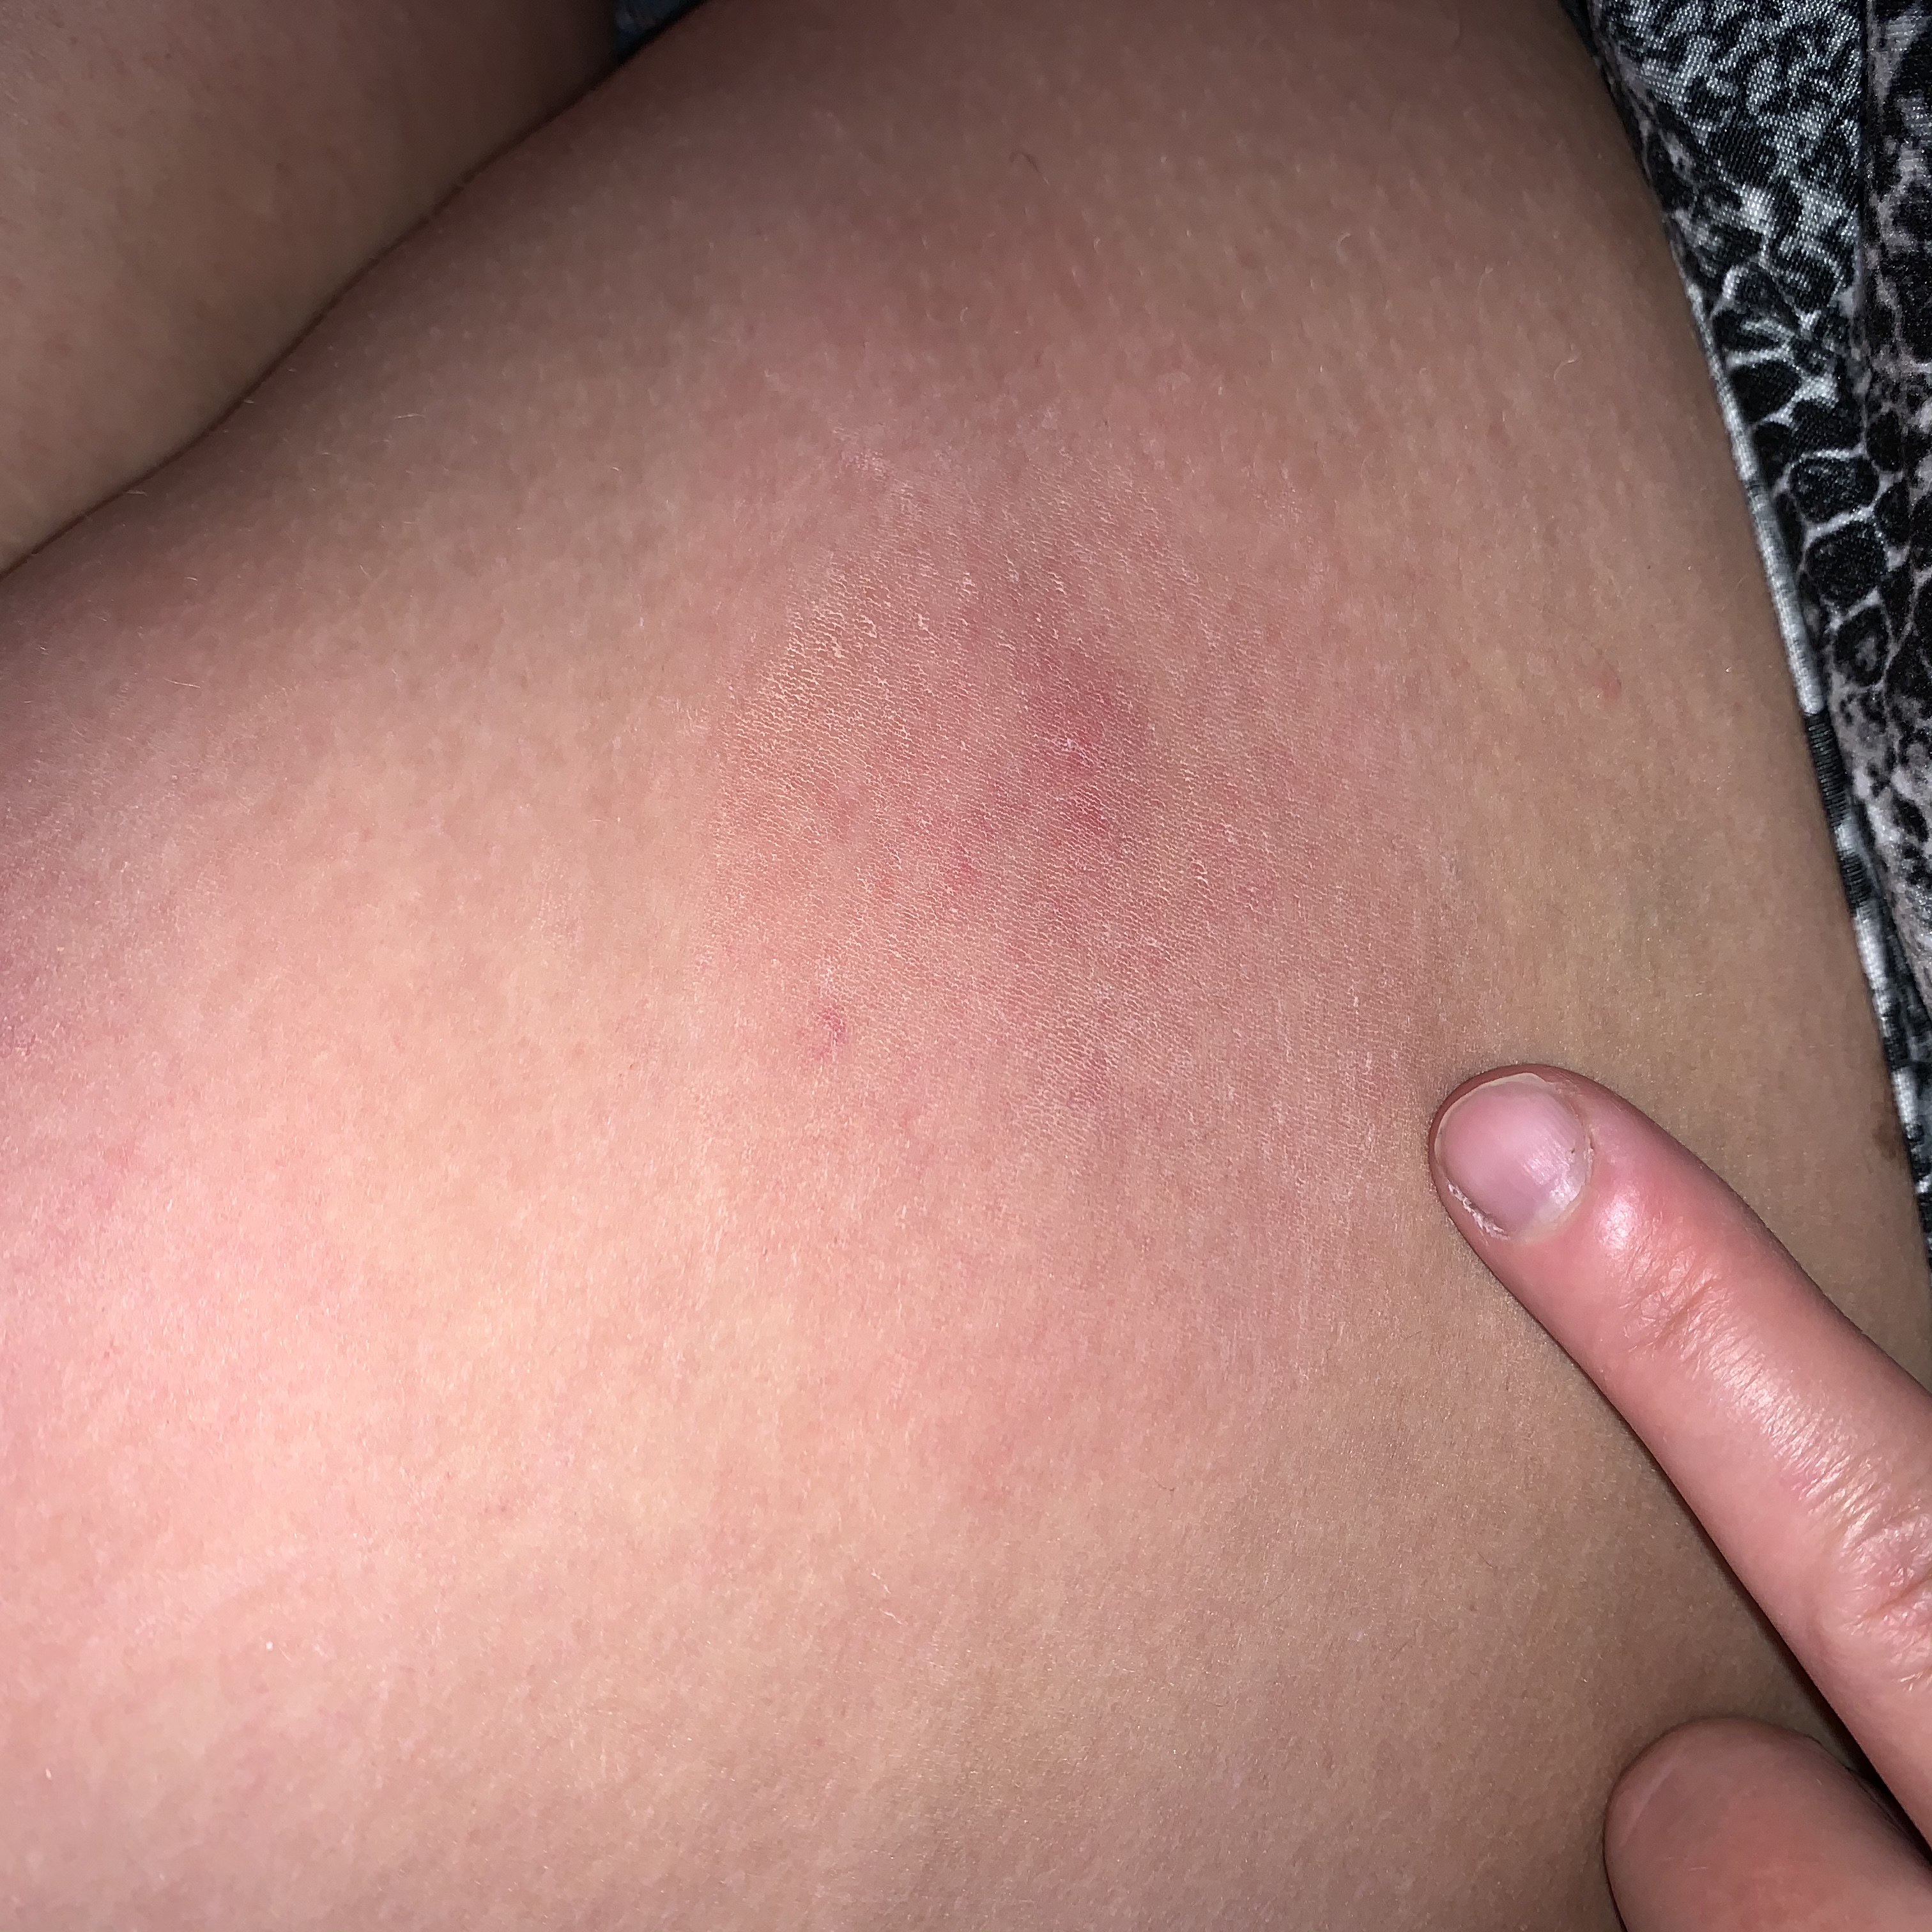 mosquito bites swelling